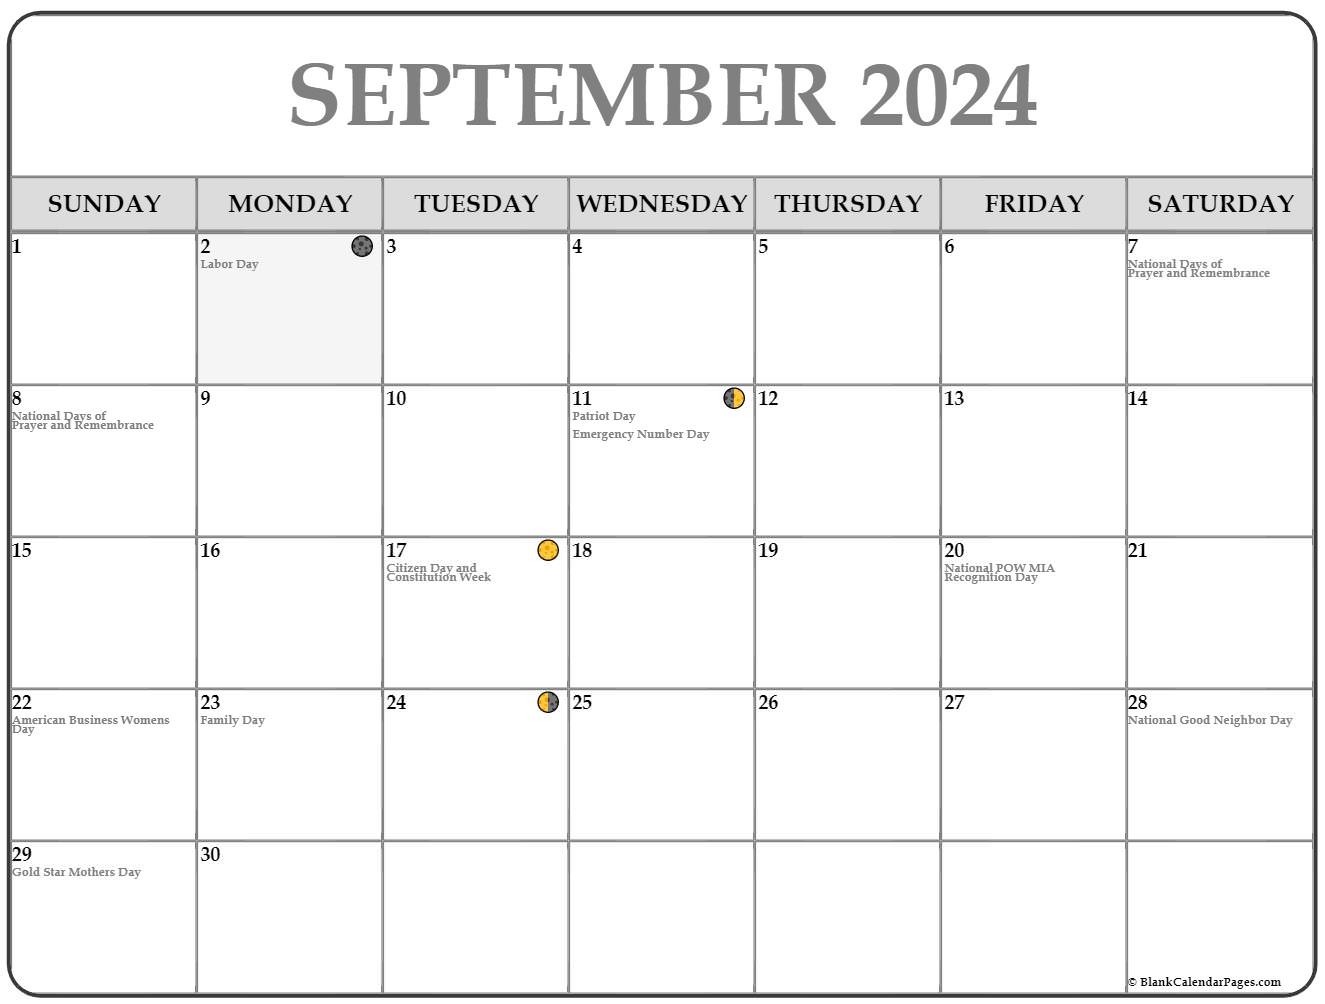 Lunar Calendar 2024 September May Calendar 2024 - Free Printable 2024 Calendar With Moon Phases